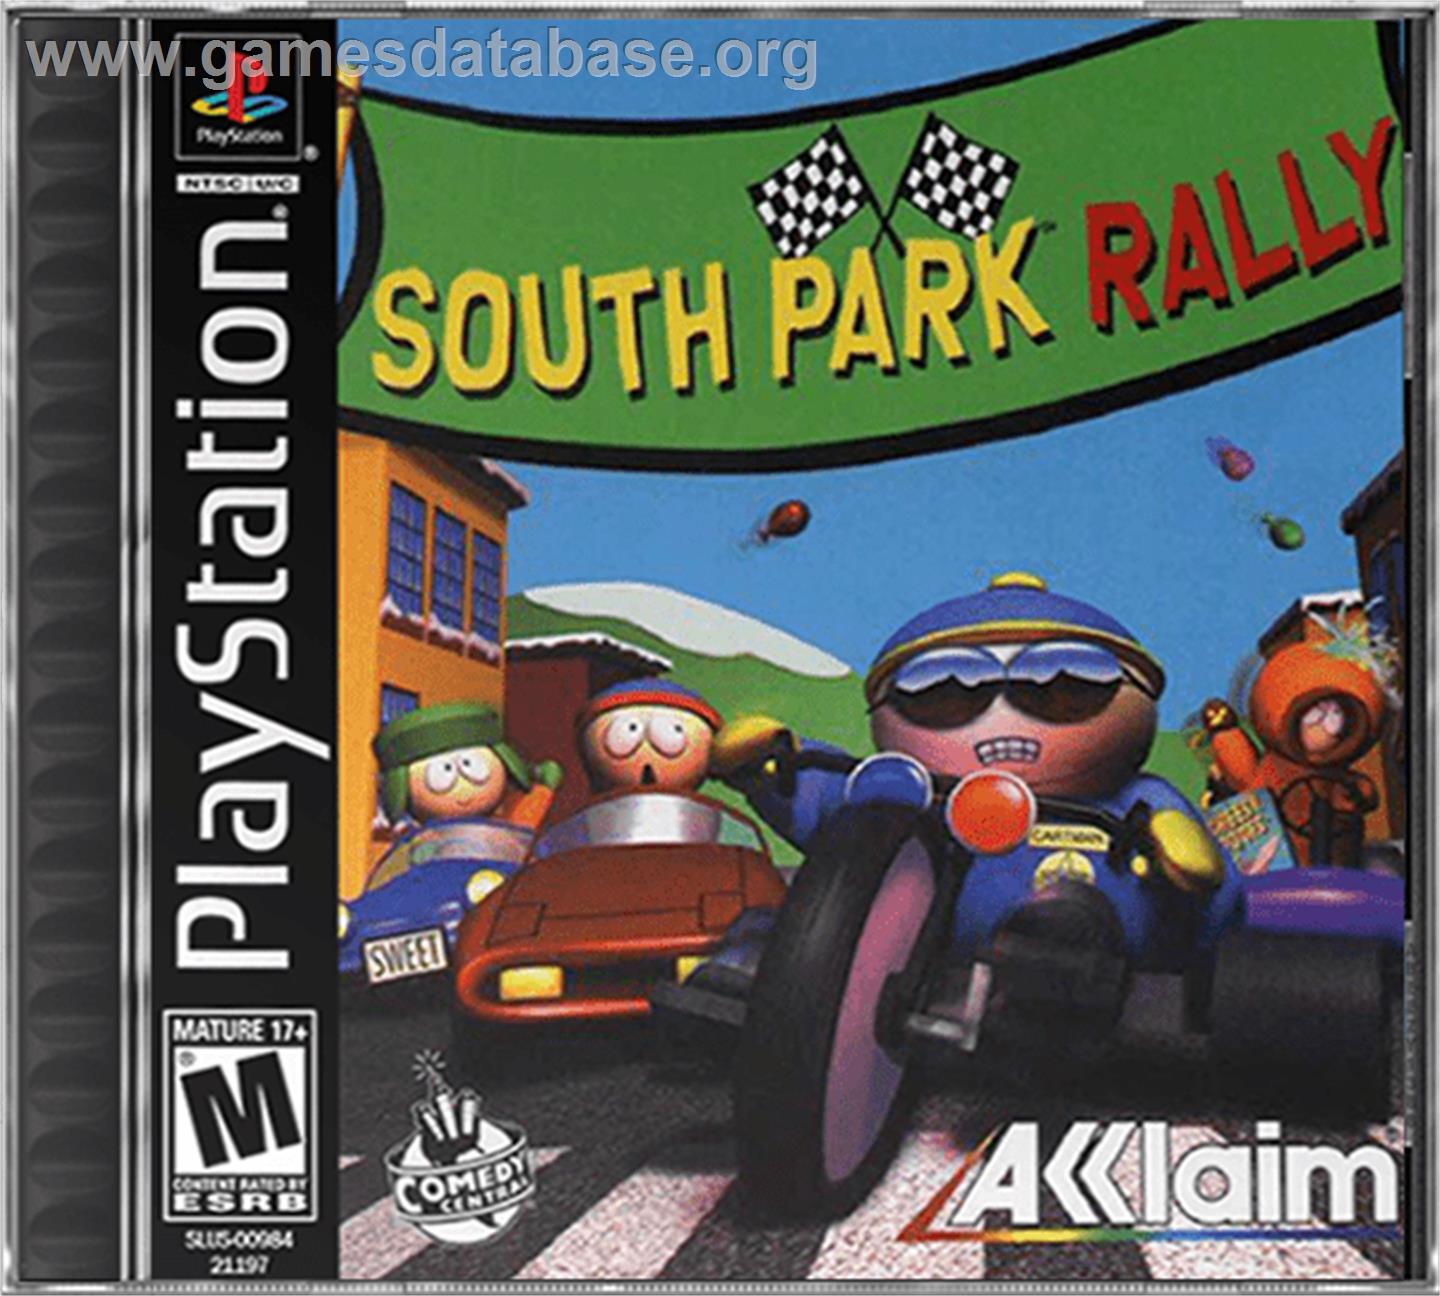 South Park Rally - Sony Playstation - Artwork - Box